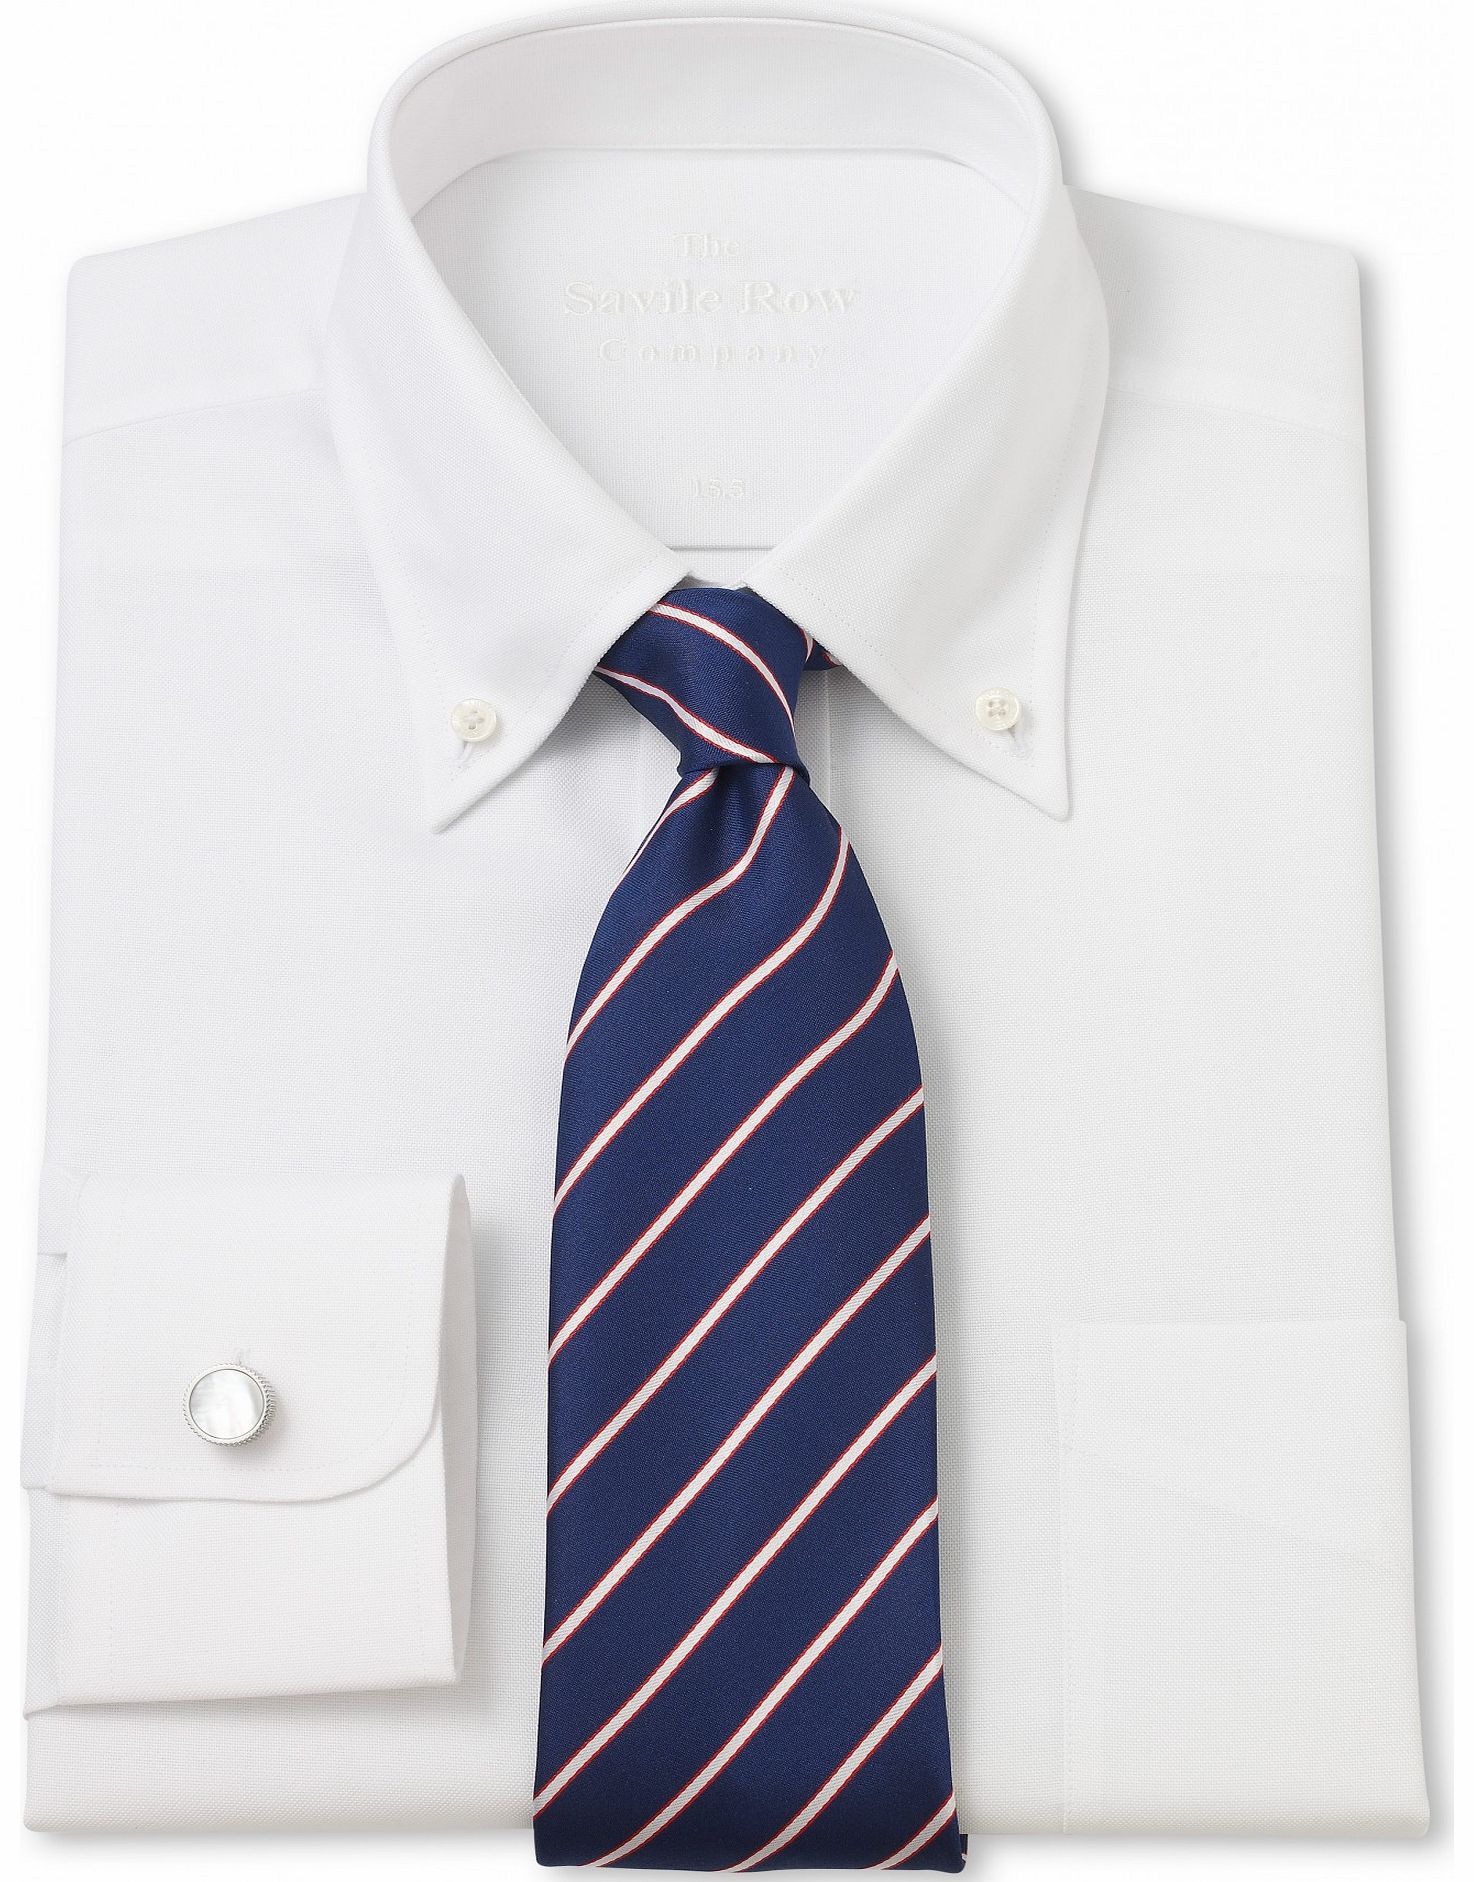 Savile Row Company White Oxford Button Down Classic Shirt 16 1/2``